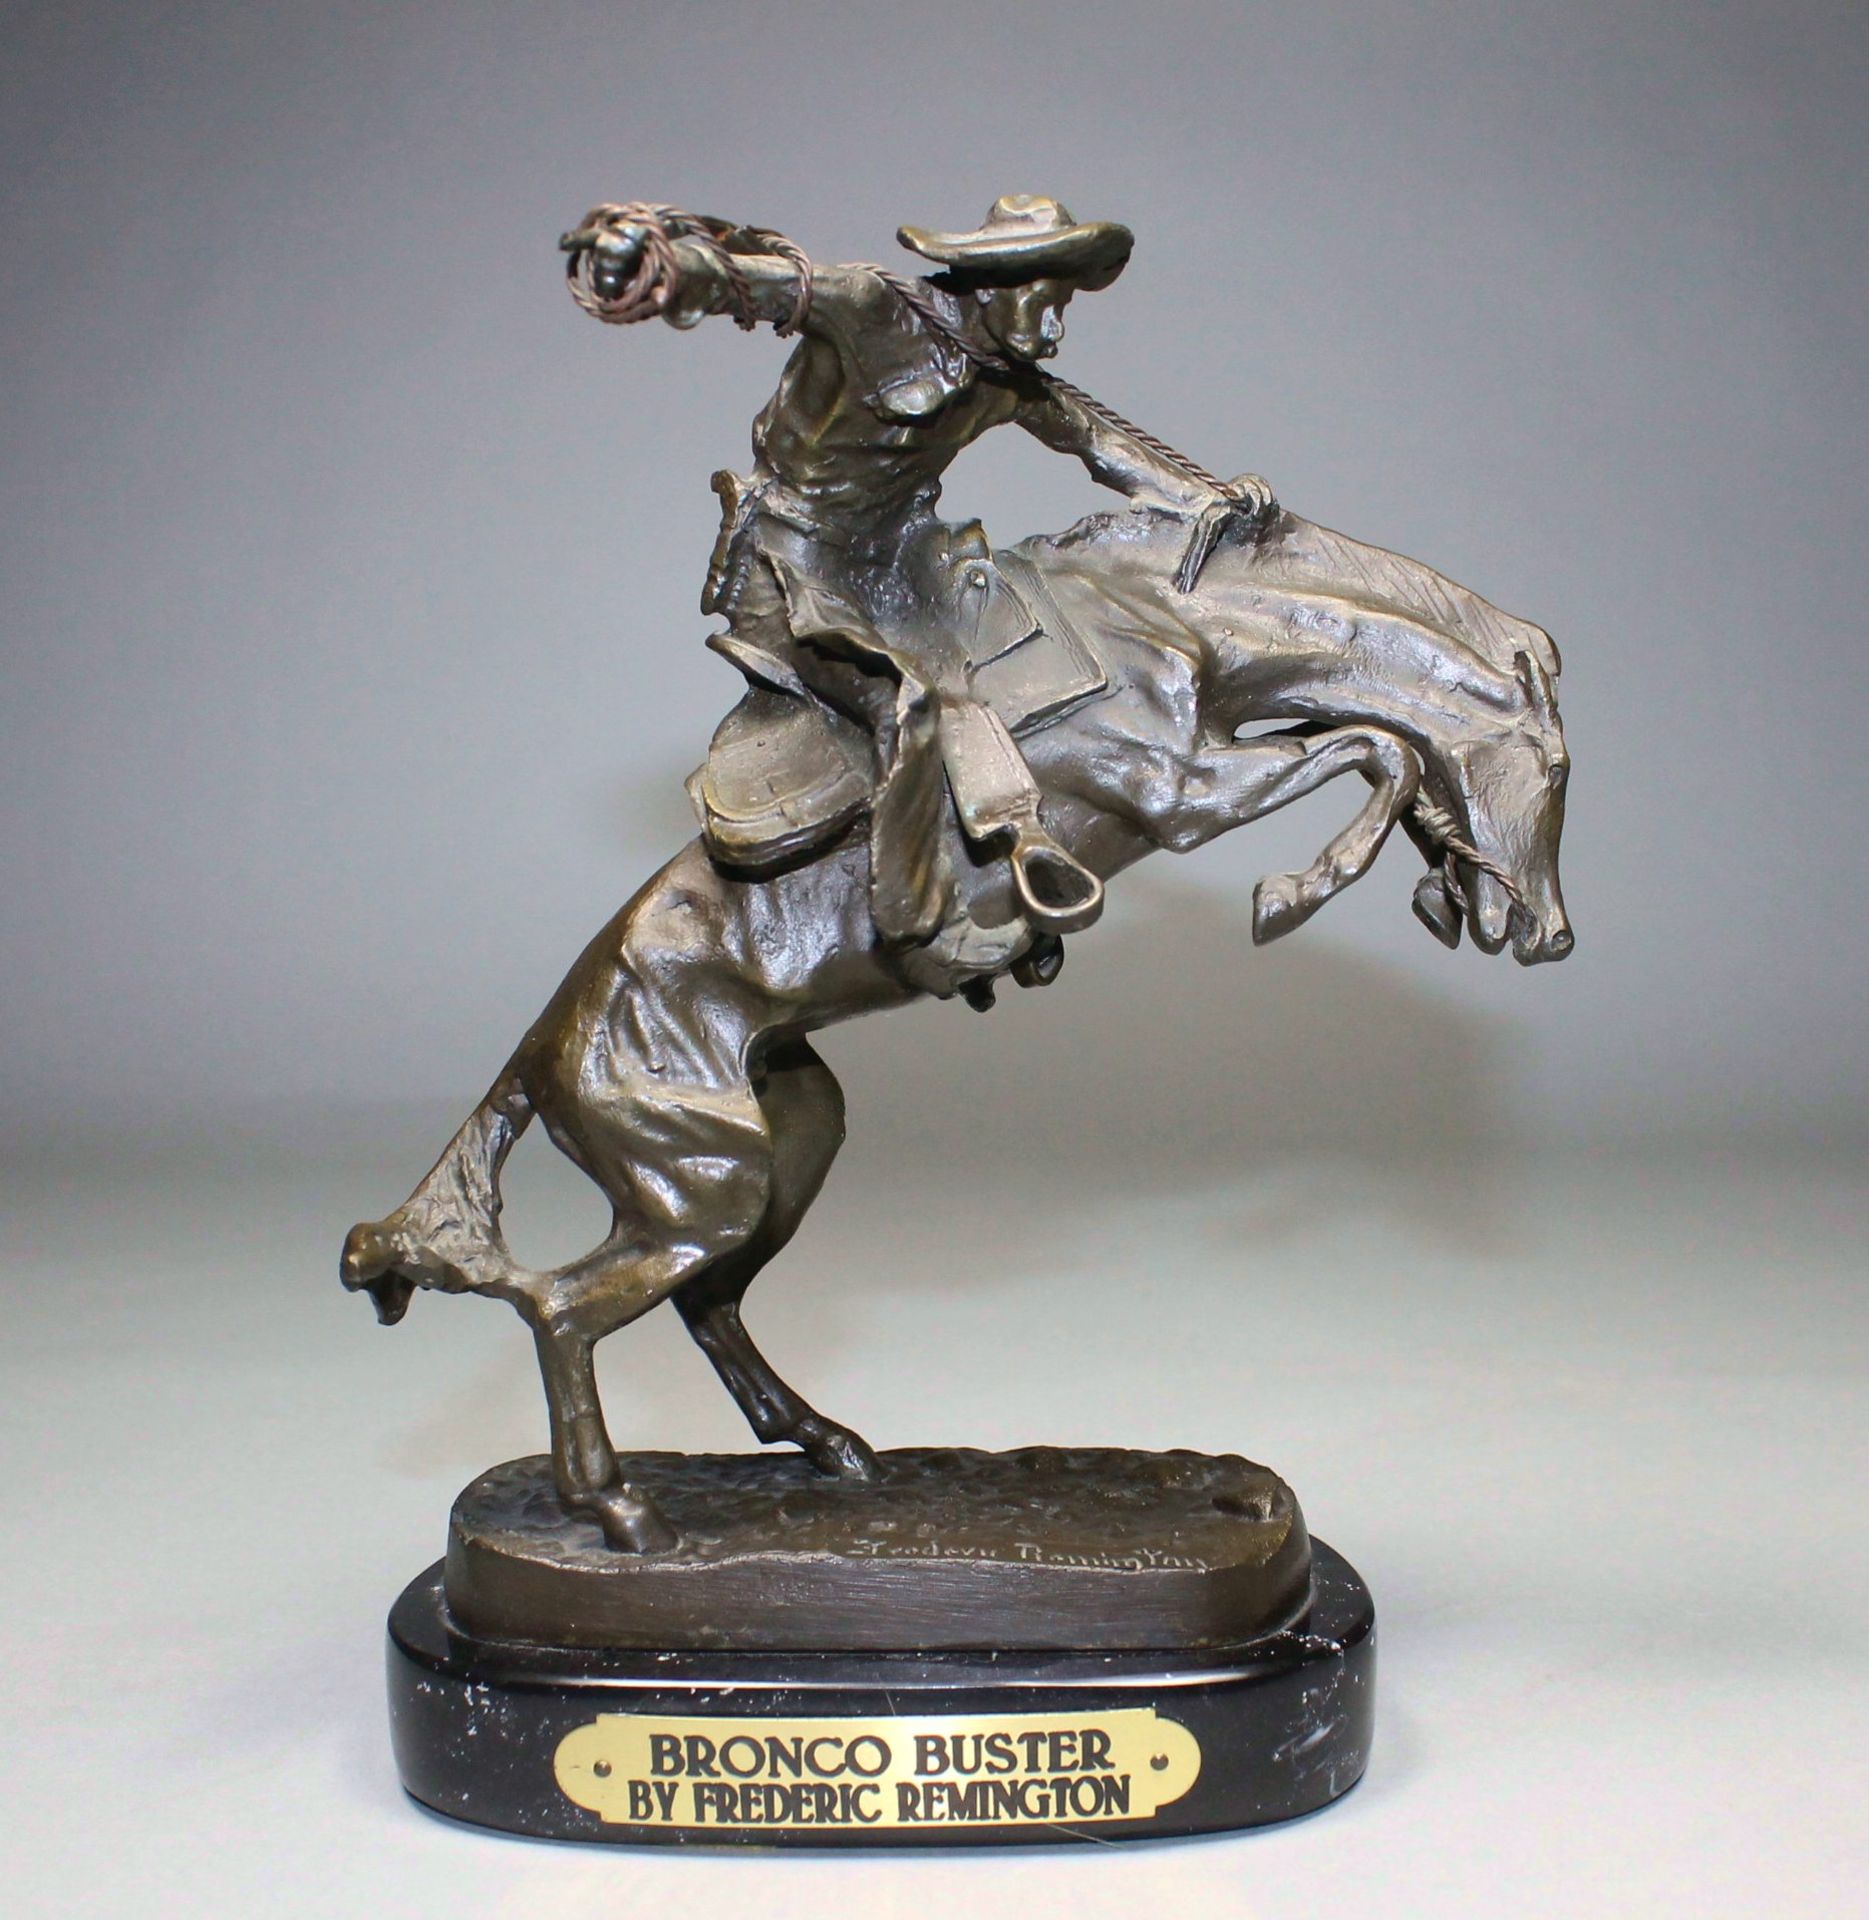 1 Bronzefigur auf ovaler Marmorplinthe "The Bronco Buster by Frederic Remington", mit Zertifikat, - Image 2 of 6